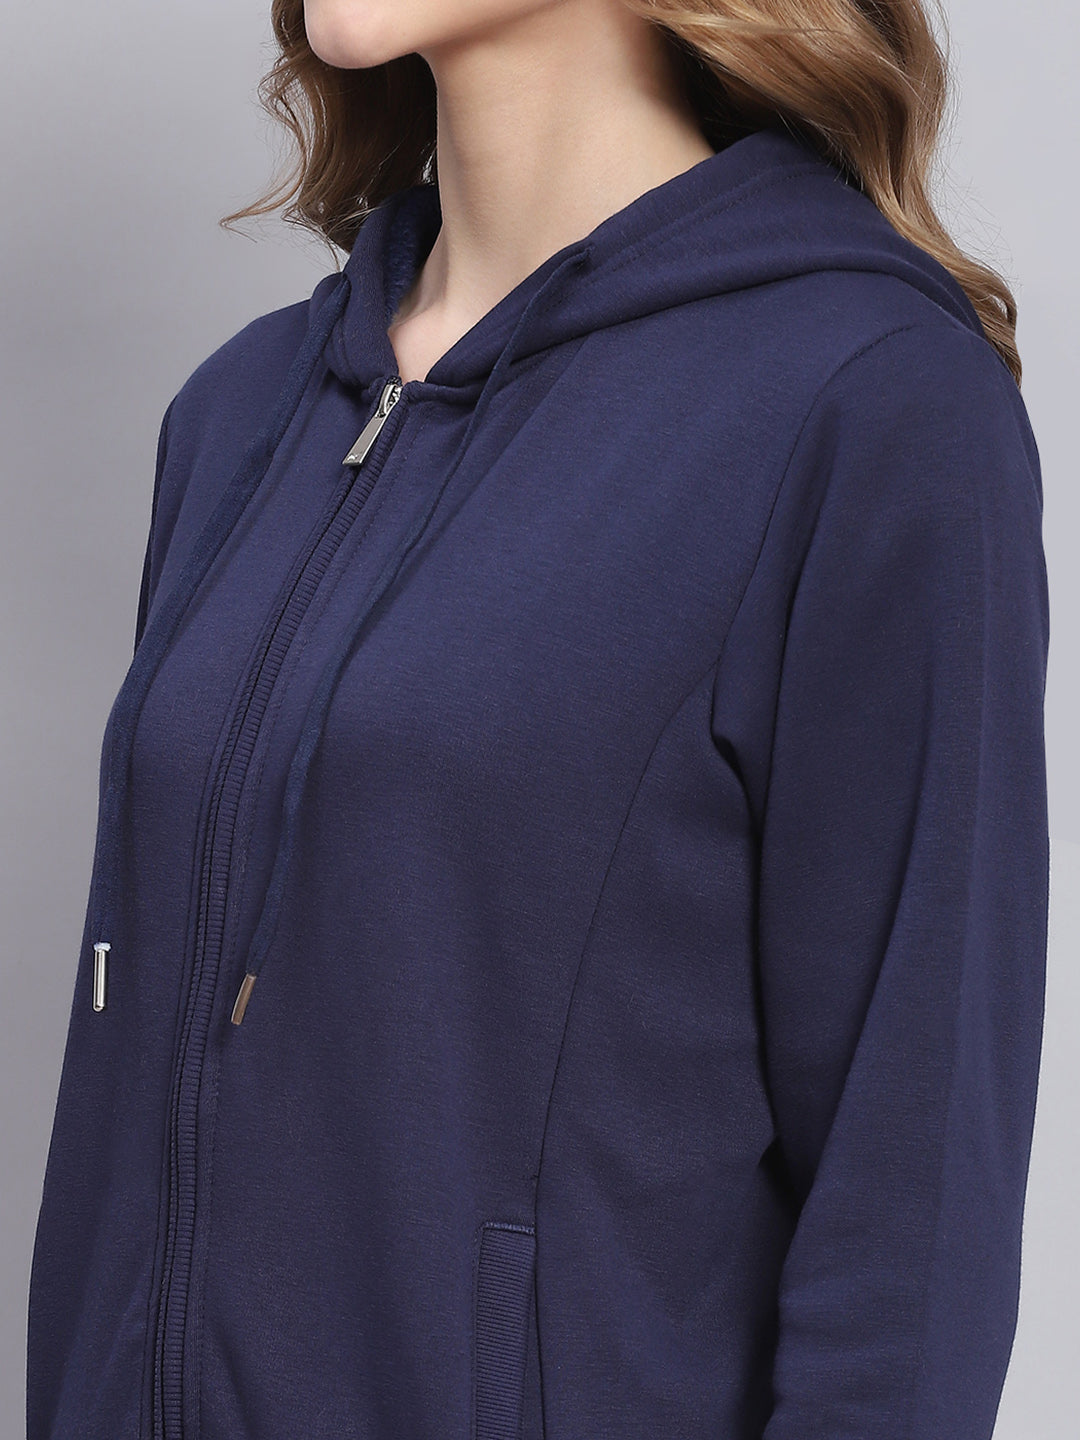 Women Navy Blue Solid Hooded Full Sleeve Sweatshirts